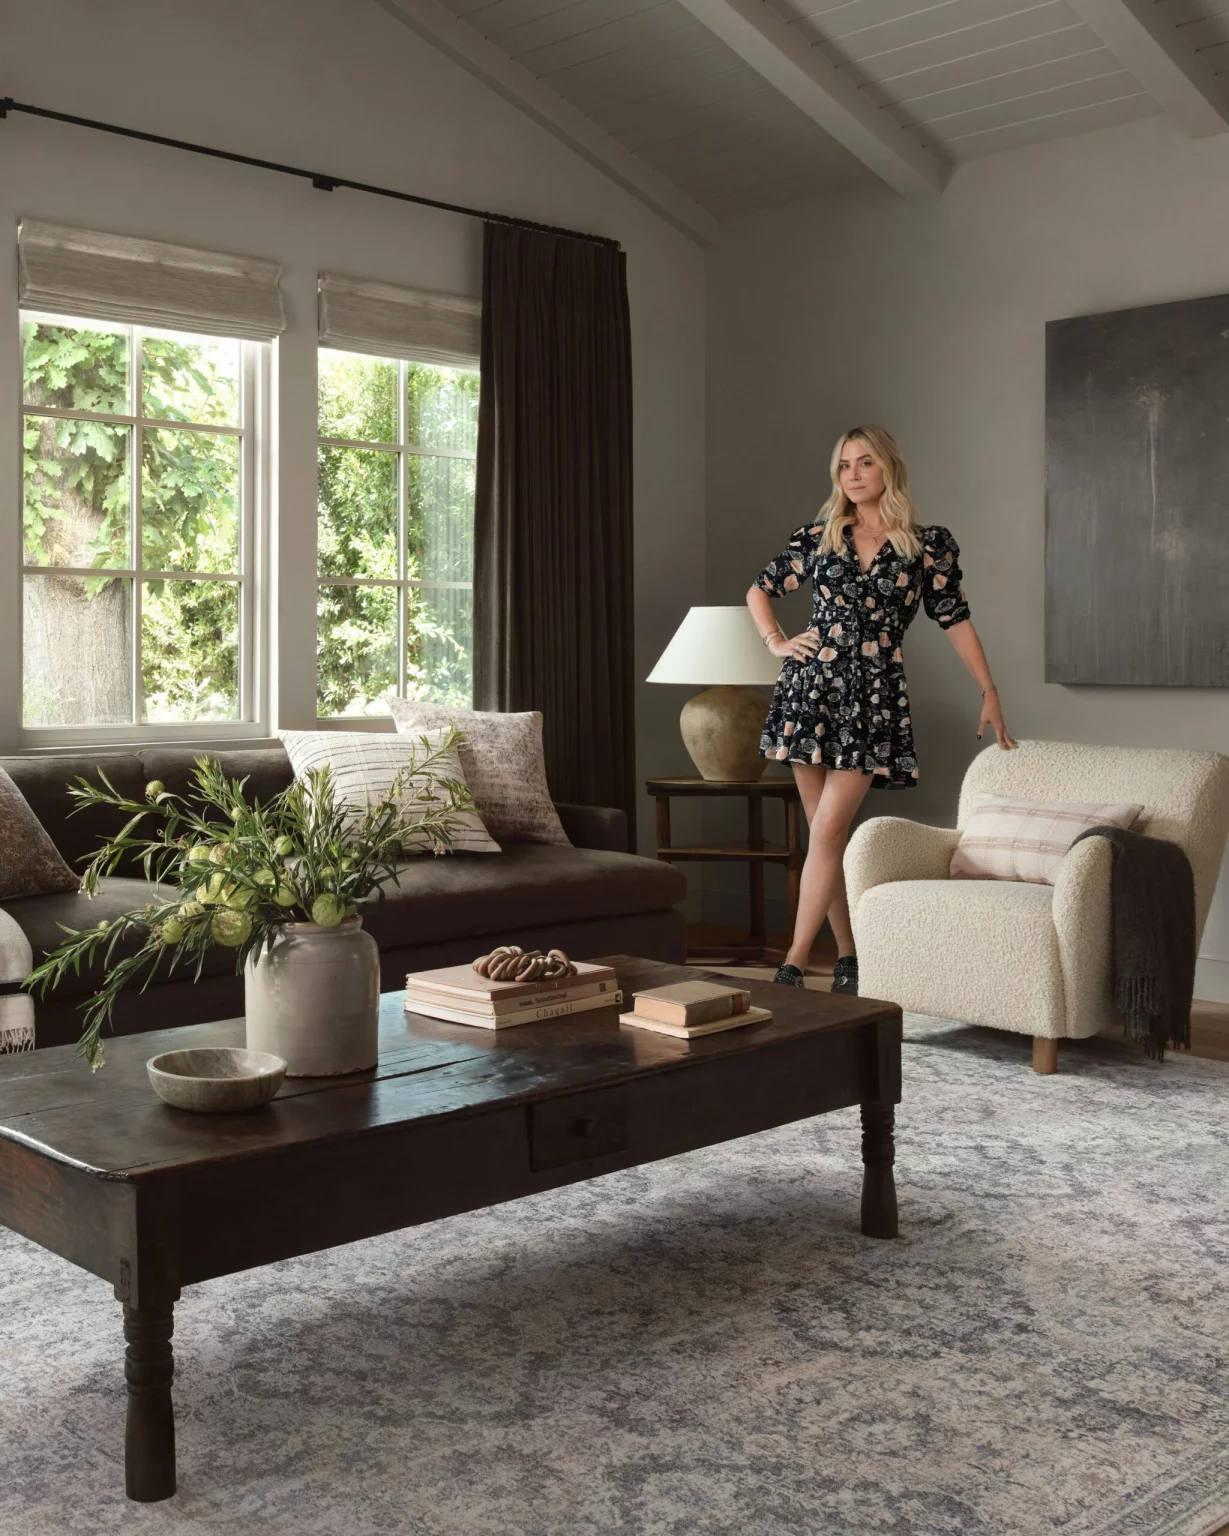 Woman standing in cozy, elegant living room interior.